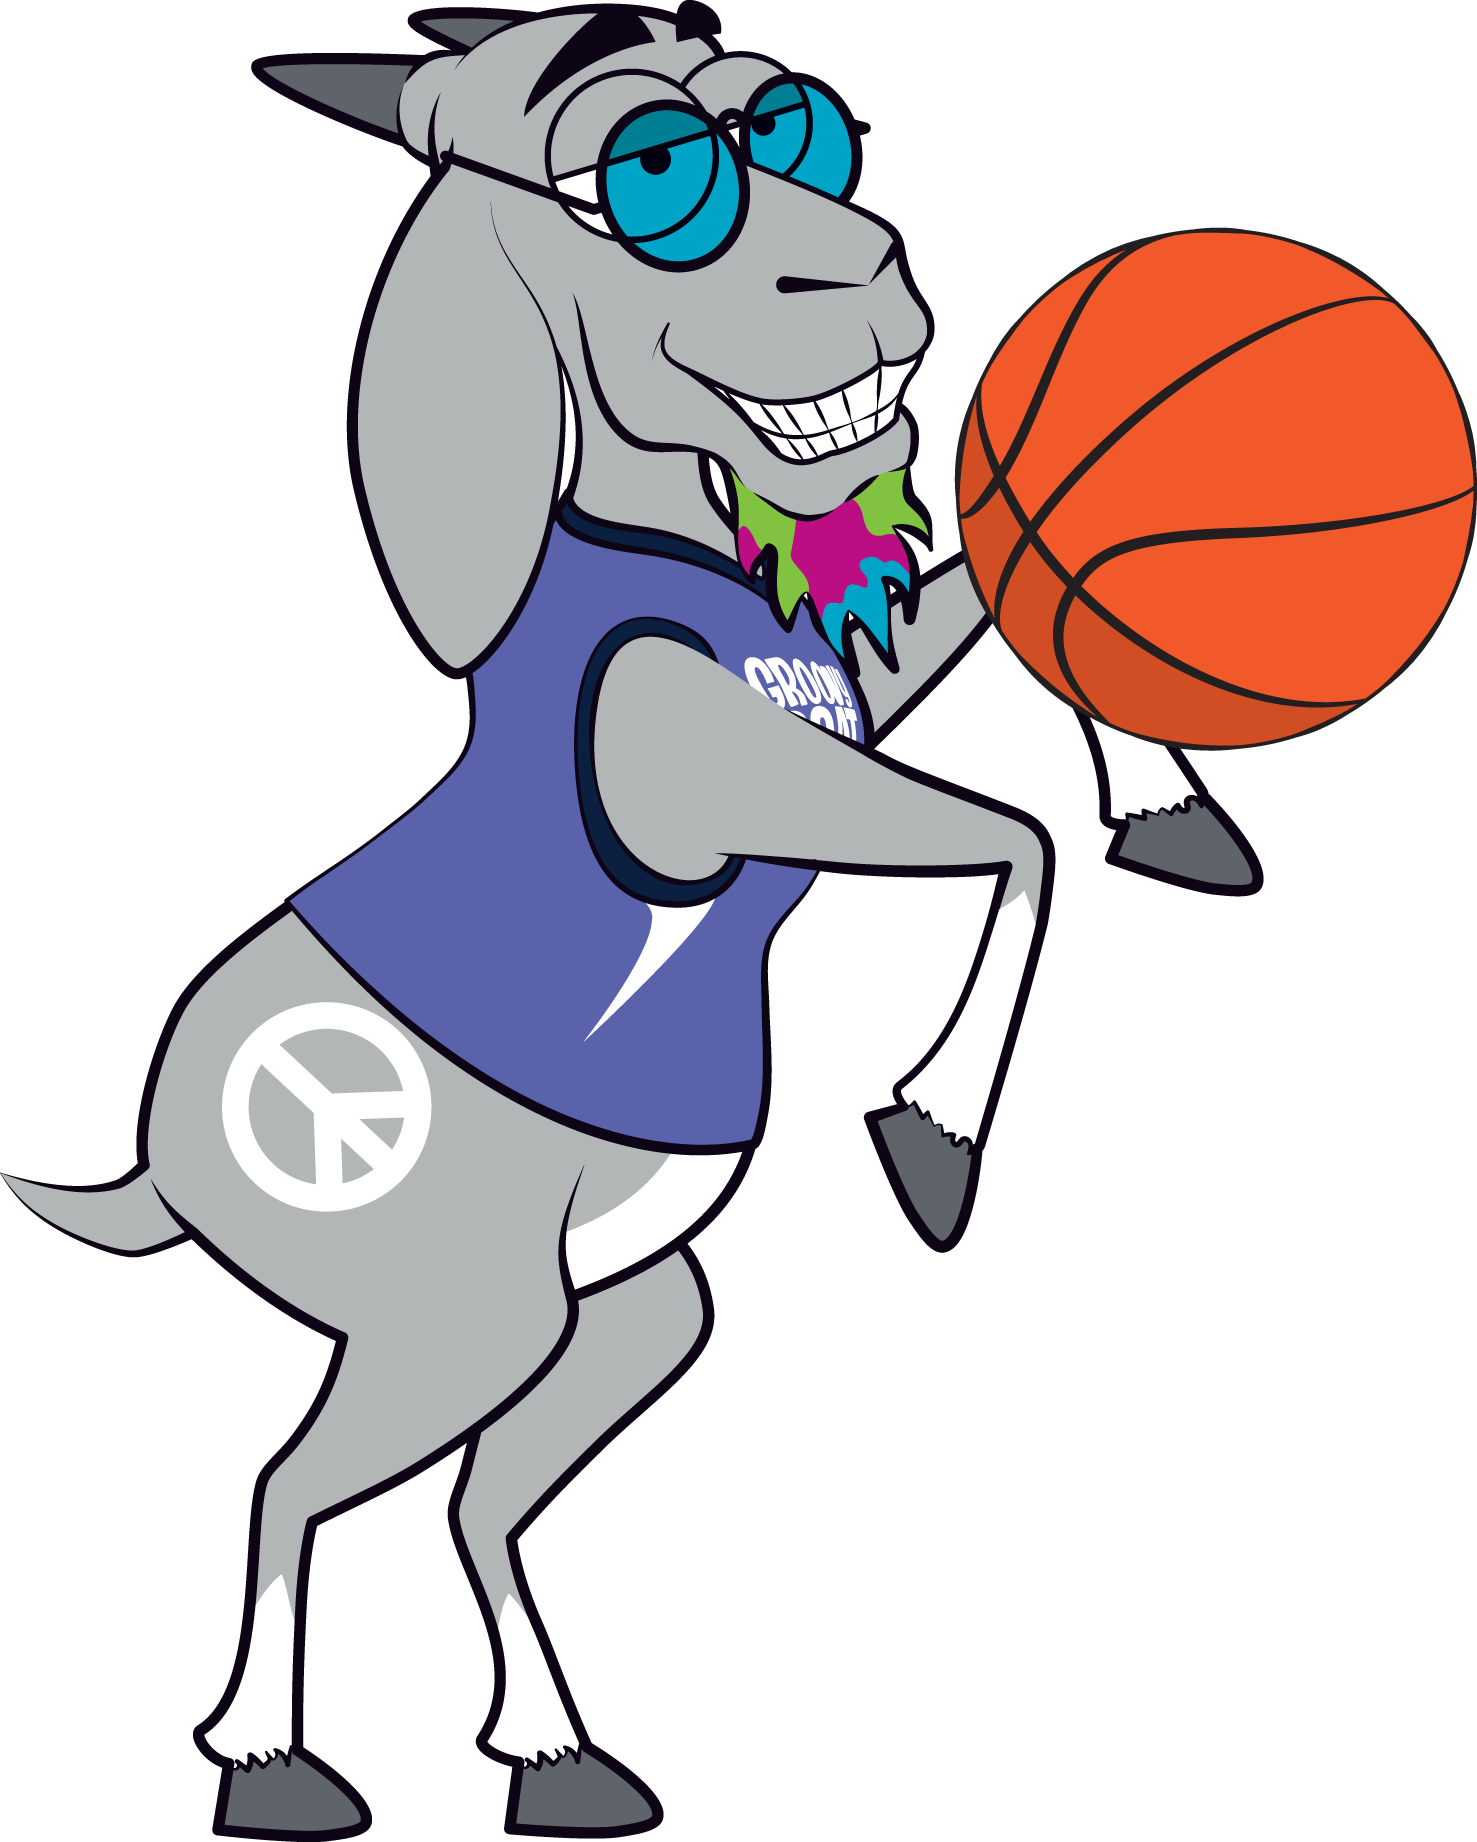 Groovy goat standing basketball final